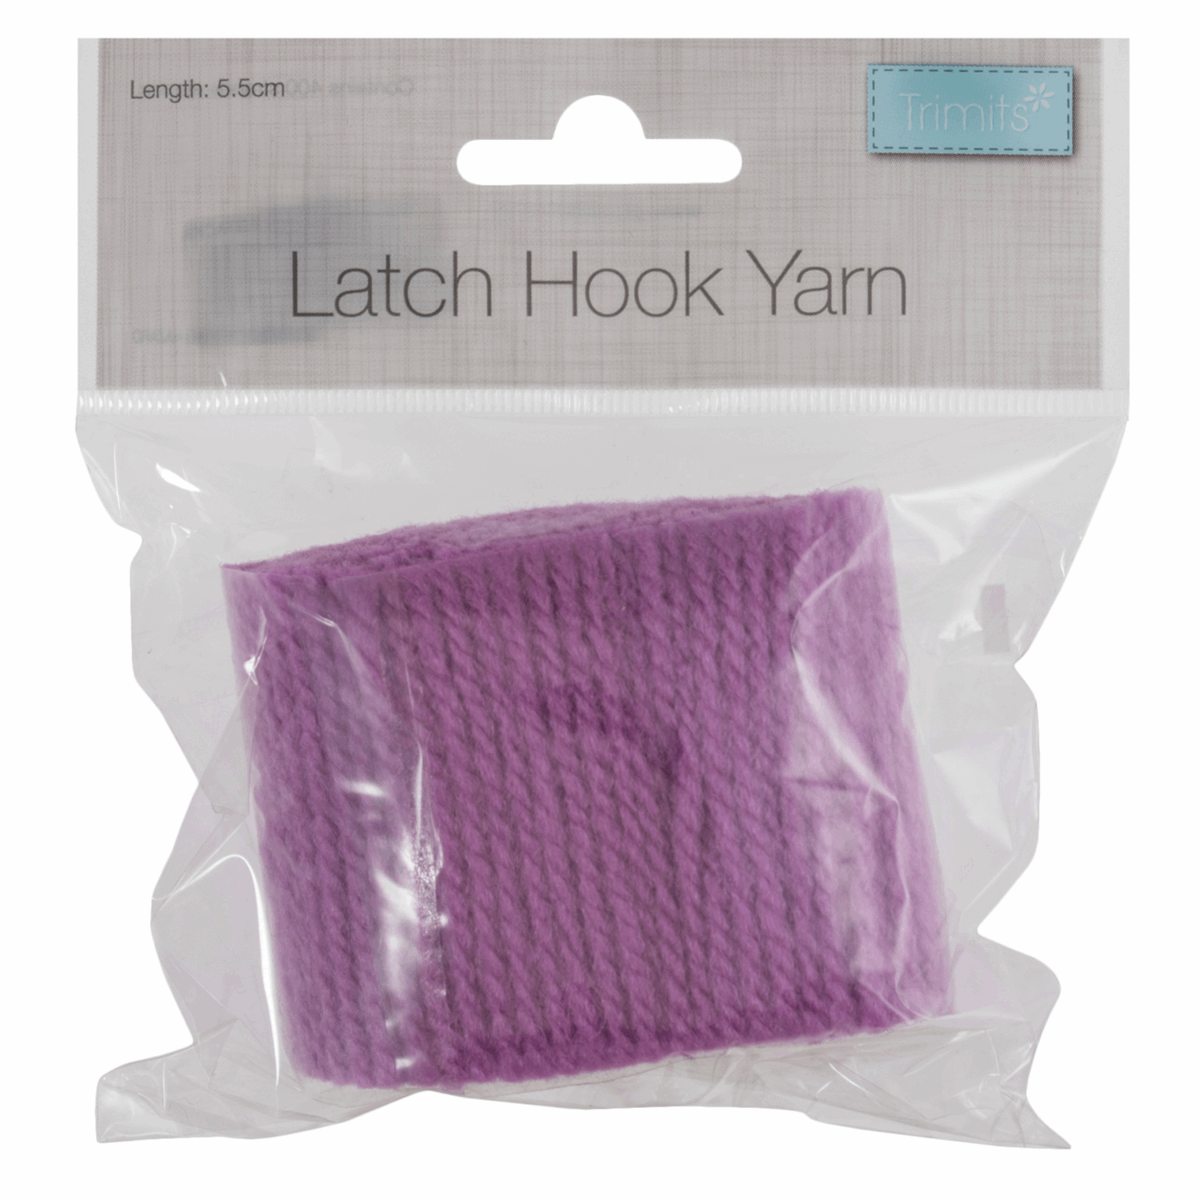 Latch Hook Yarn 5.5cm - Mauve